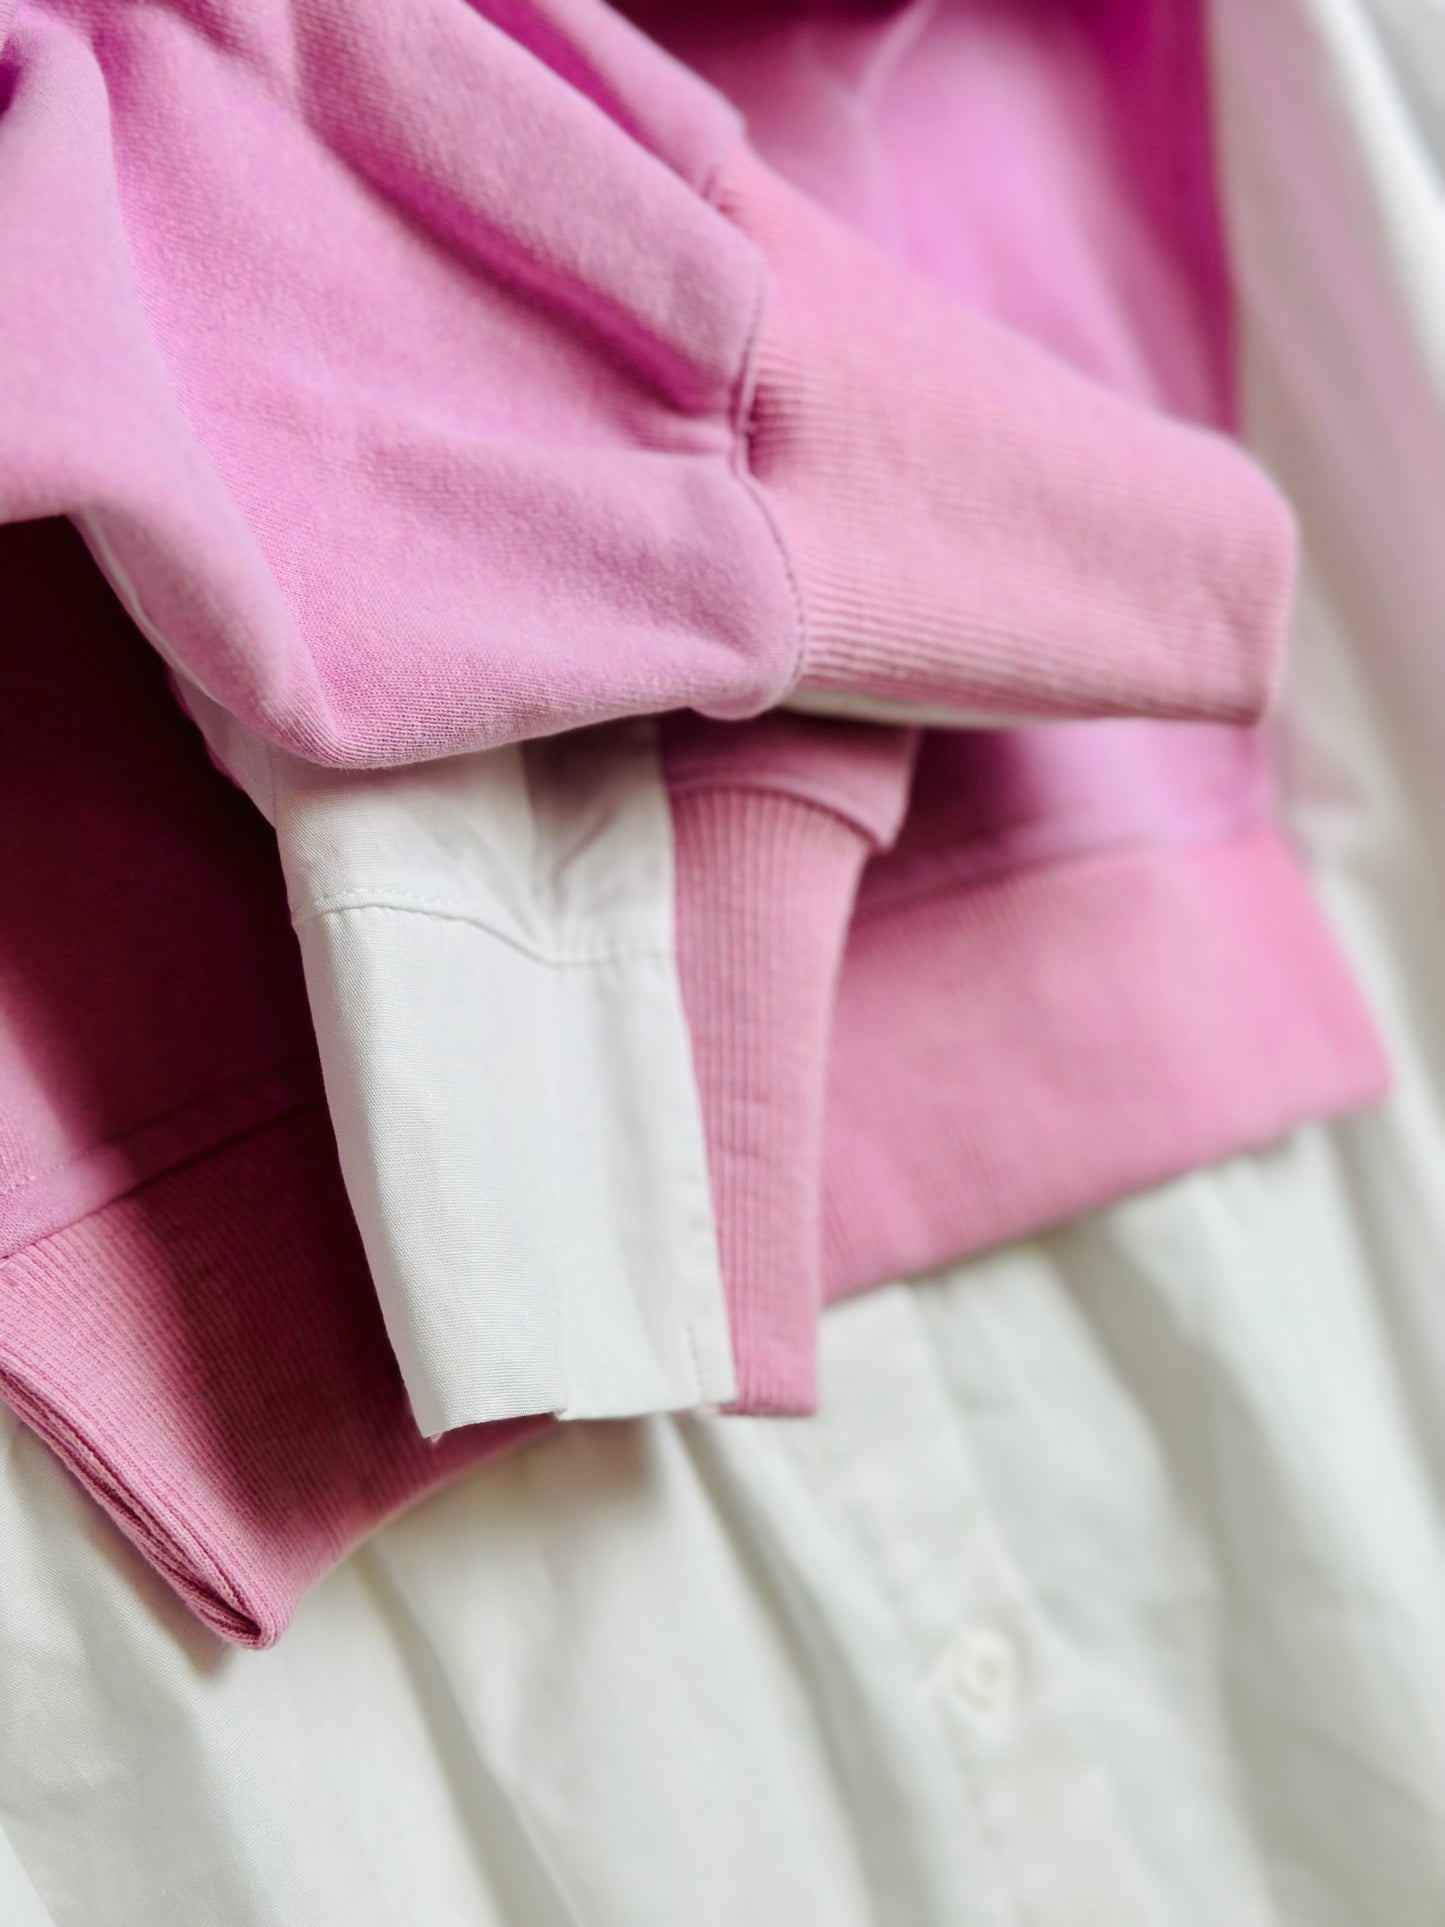 Pink and White Dress/Shirt